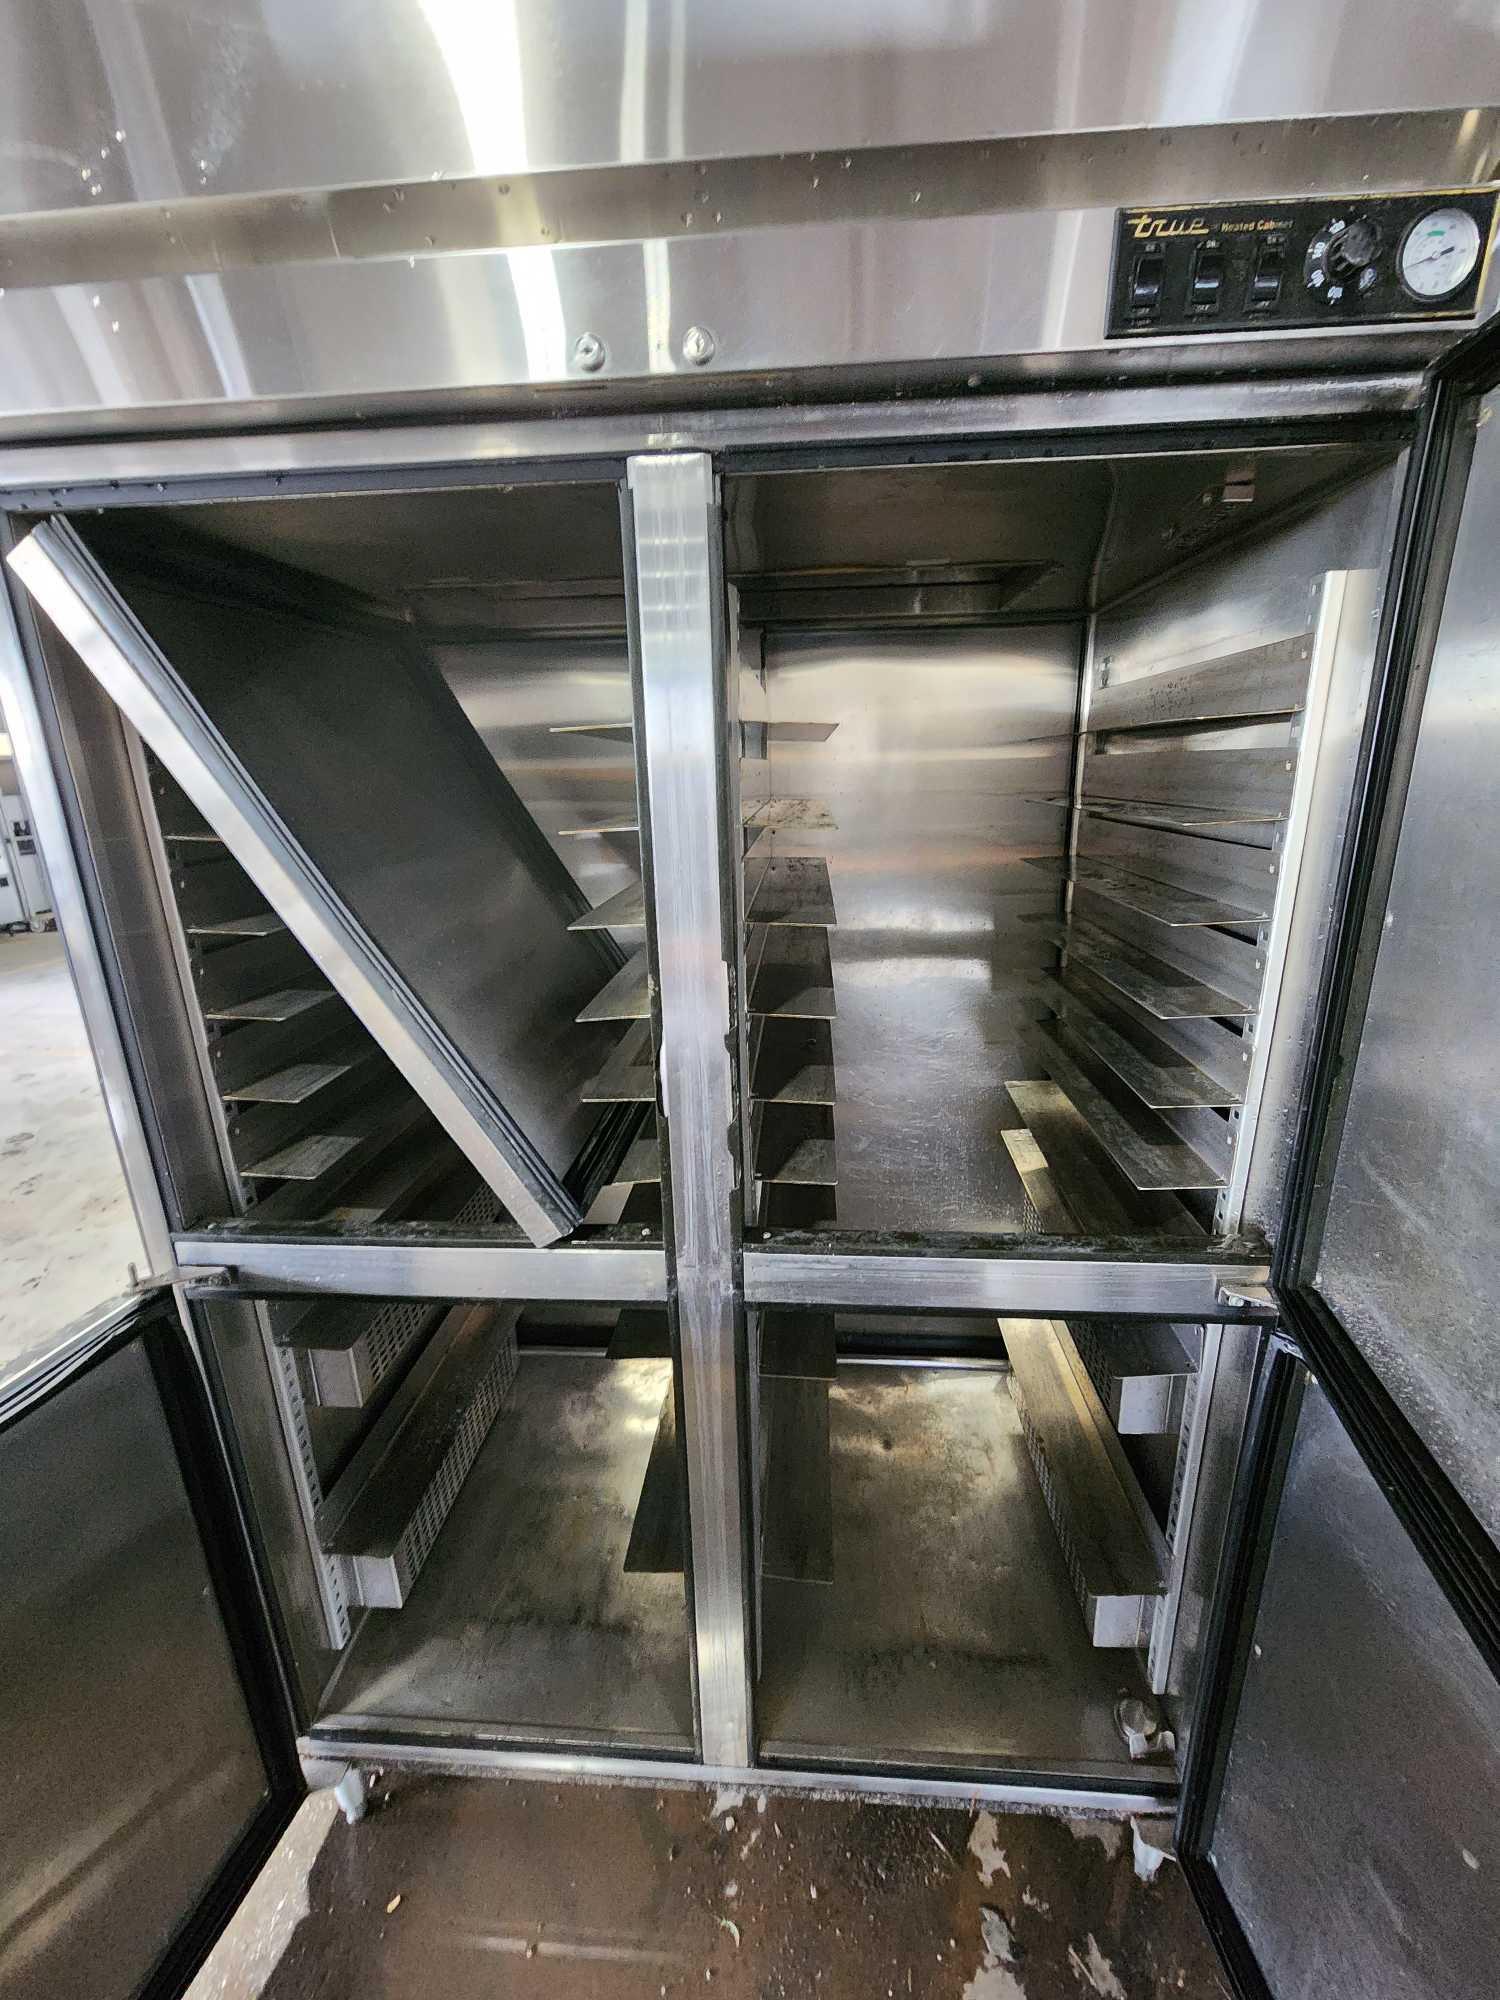 True Reach-In Stainless Steel Heated Cabinet